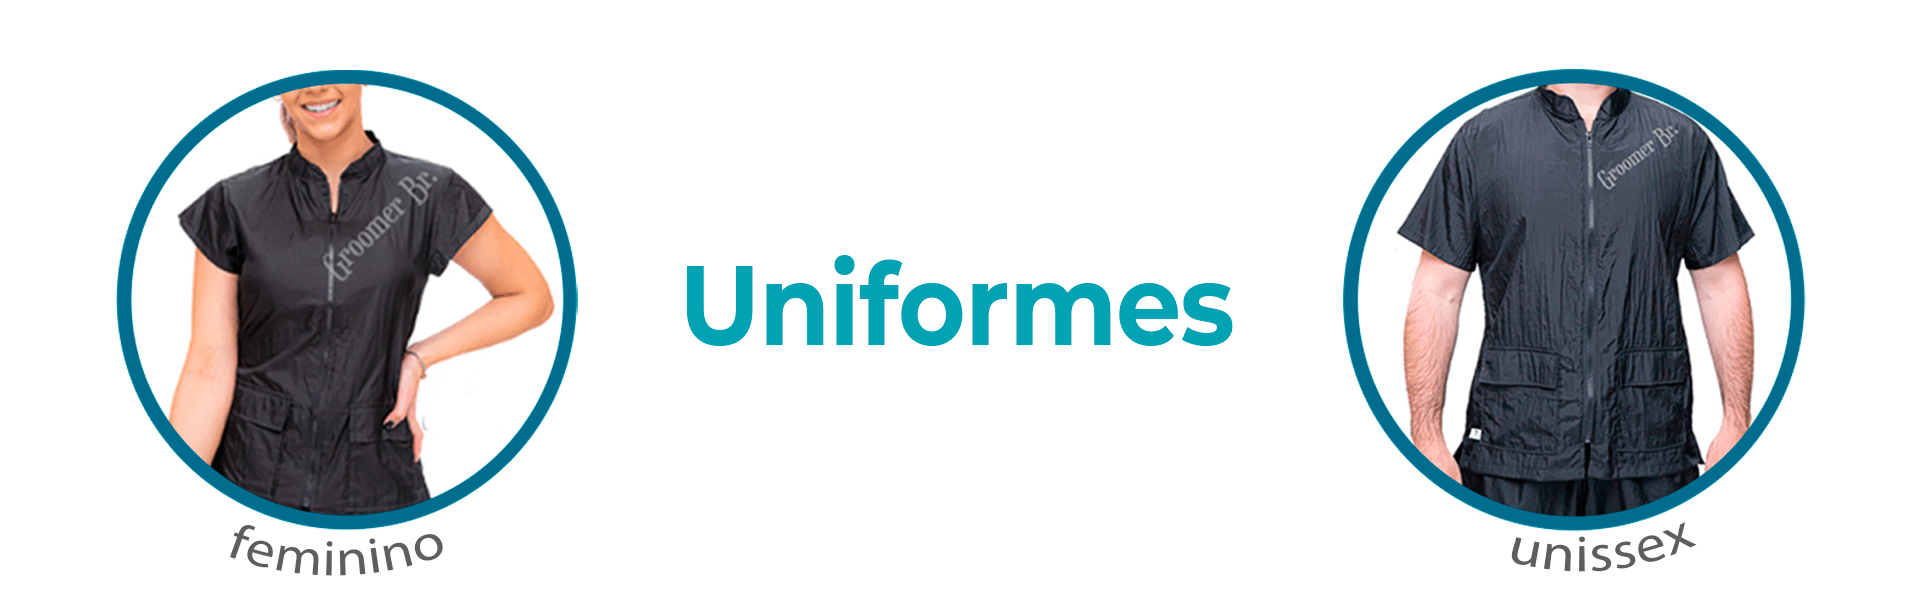 uniformes @desktop